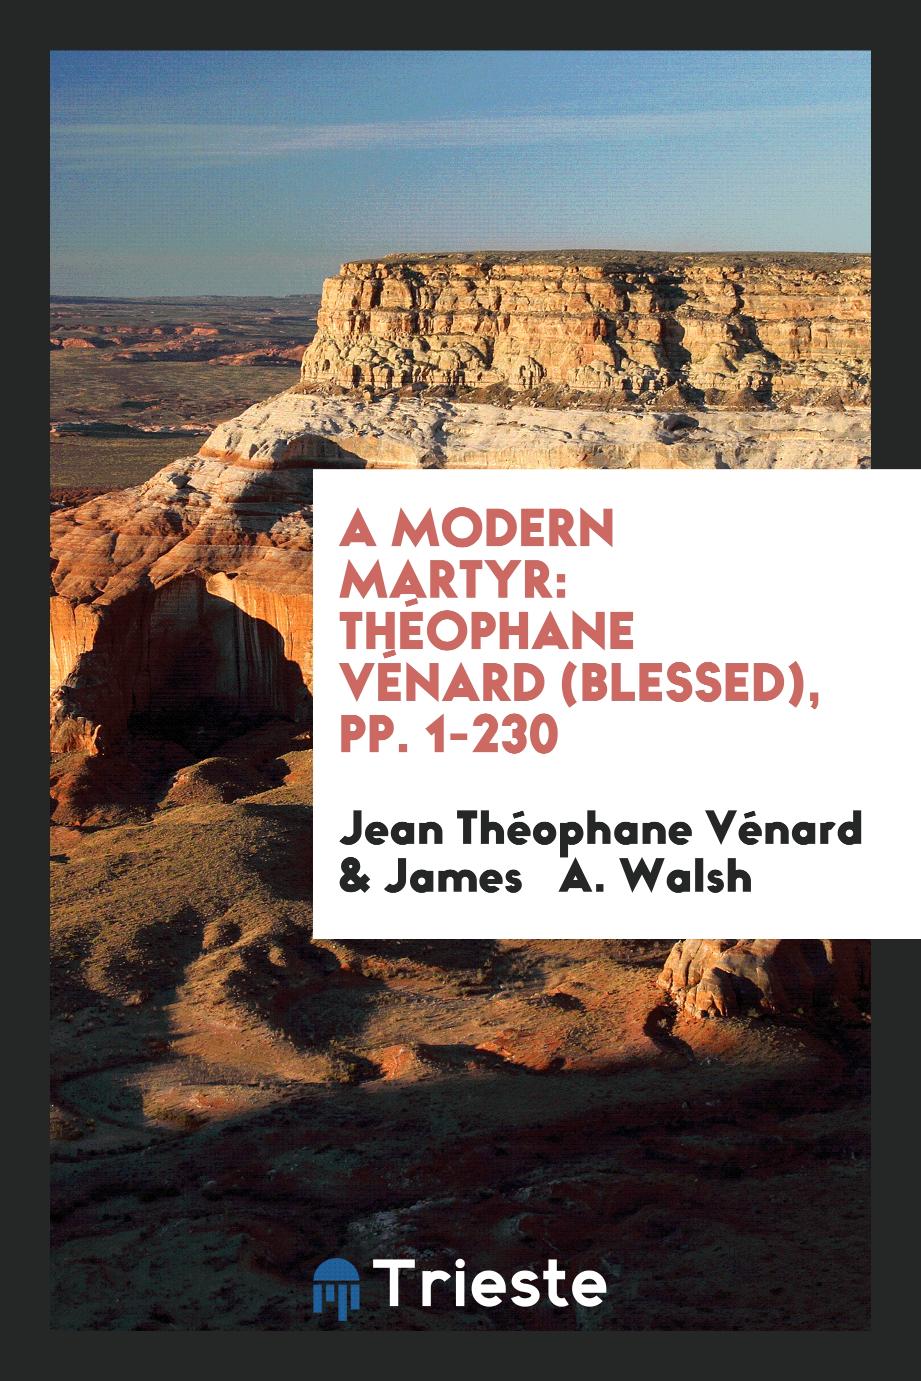 A Modern Martyr: Théophane Vénard (Blessed), pp. 1-230